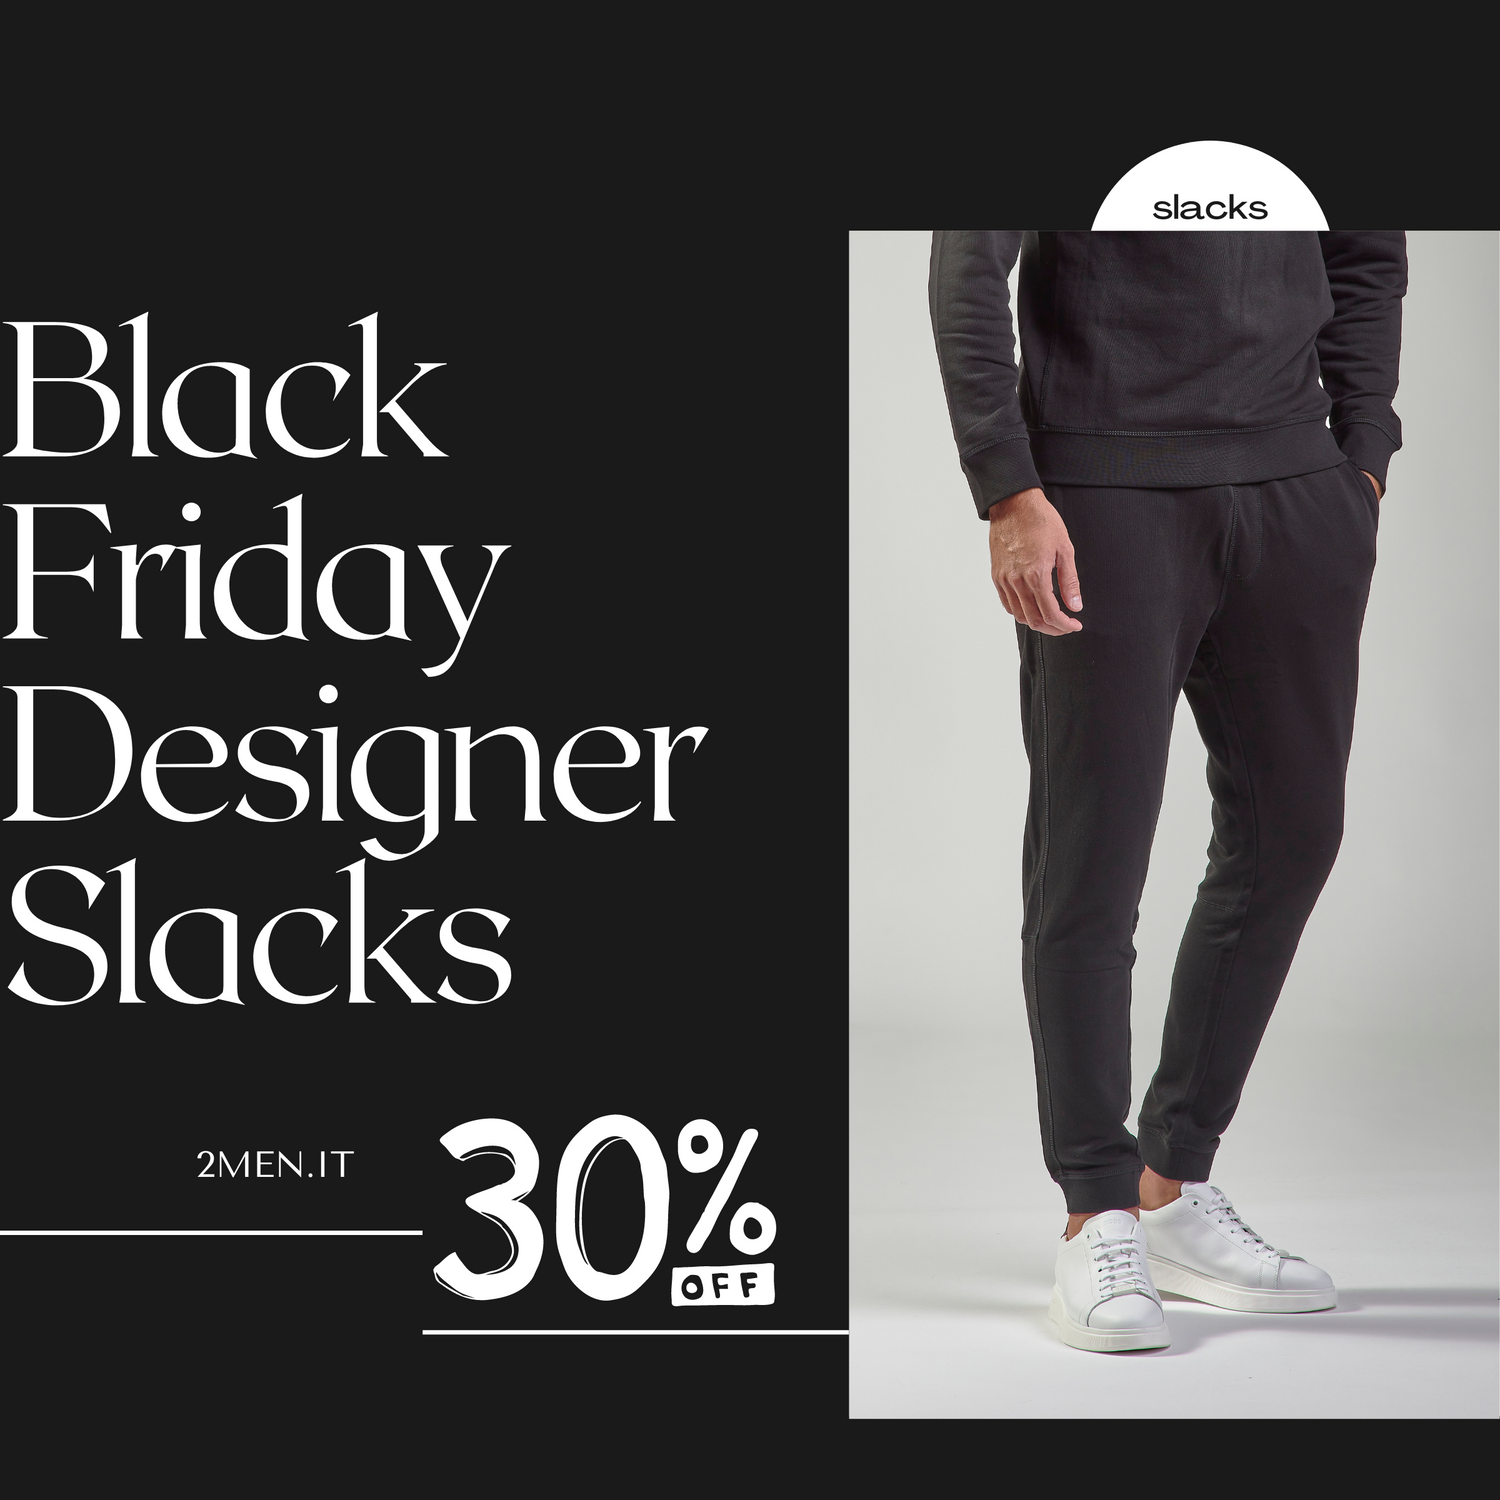 Best Black Friday Italian Slacks and Dress Pant Deals FOR MEN - 30% OFF SALE